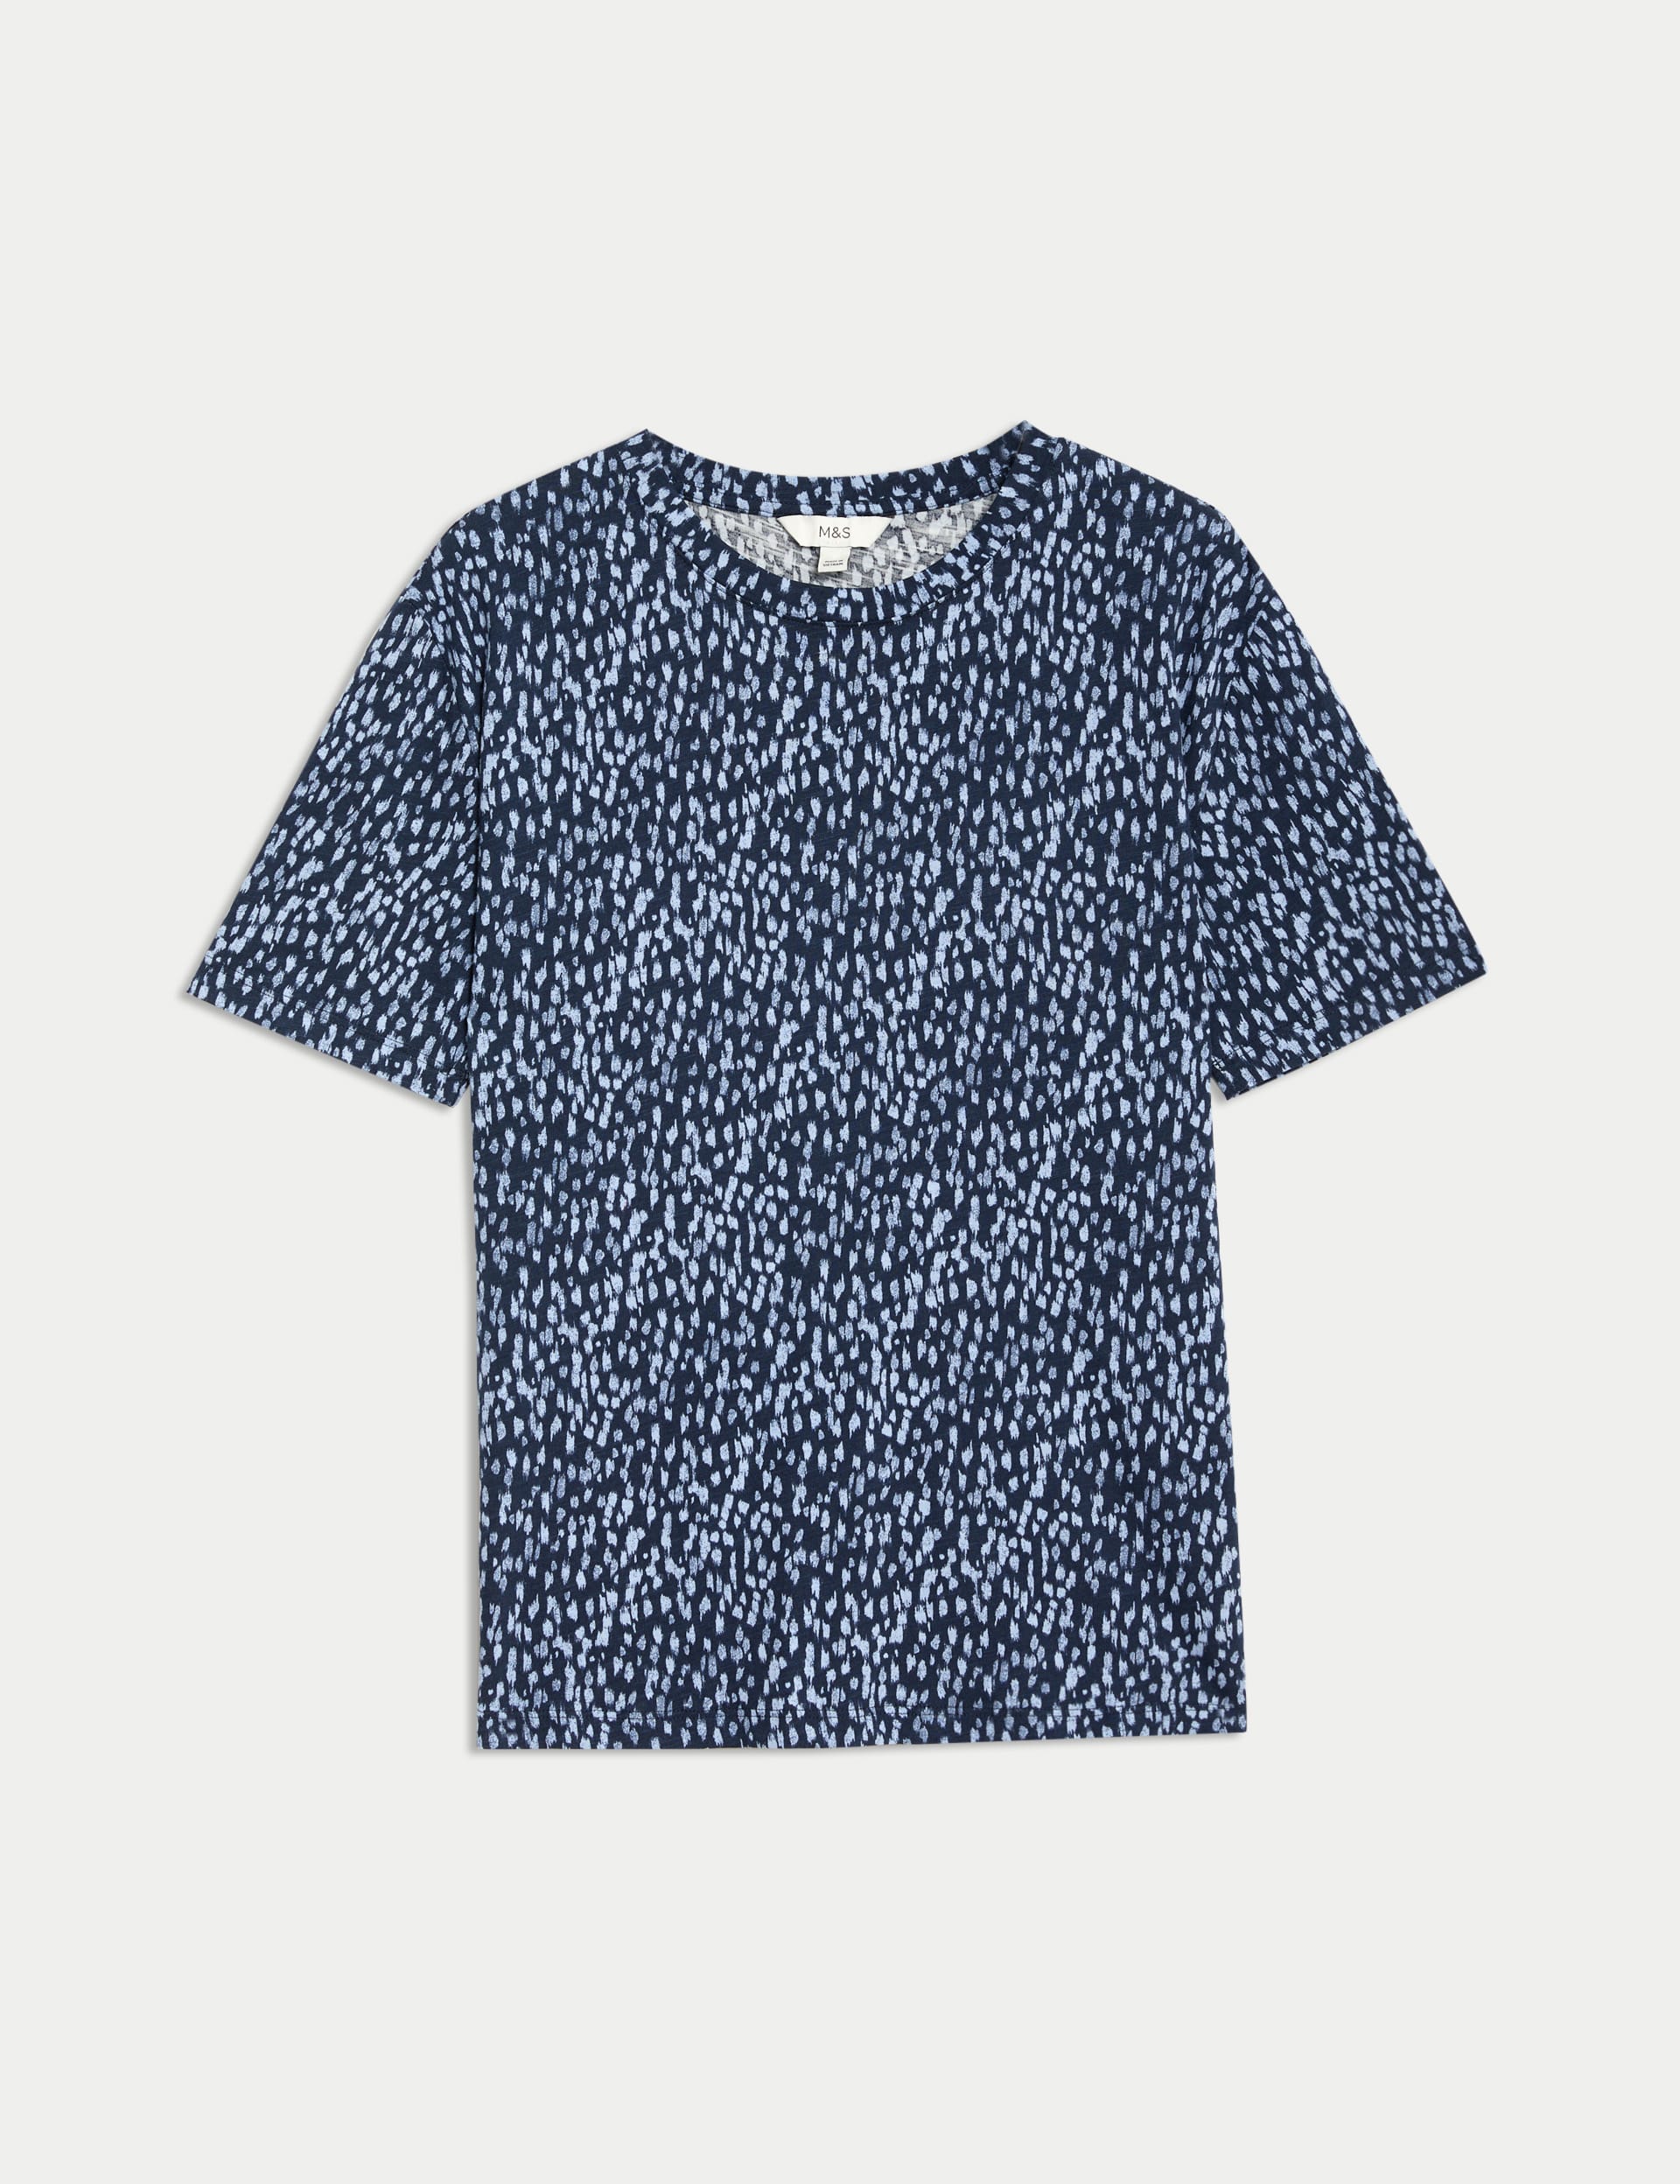 Cotton Modal Blend Printed T-Shirt